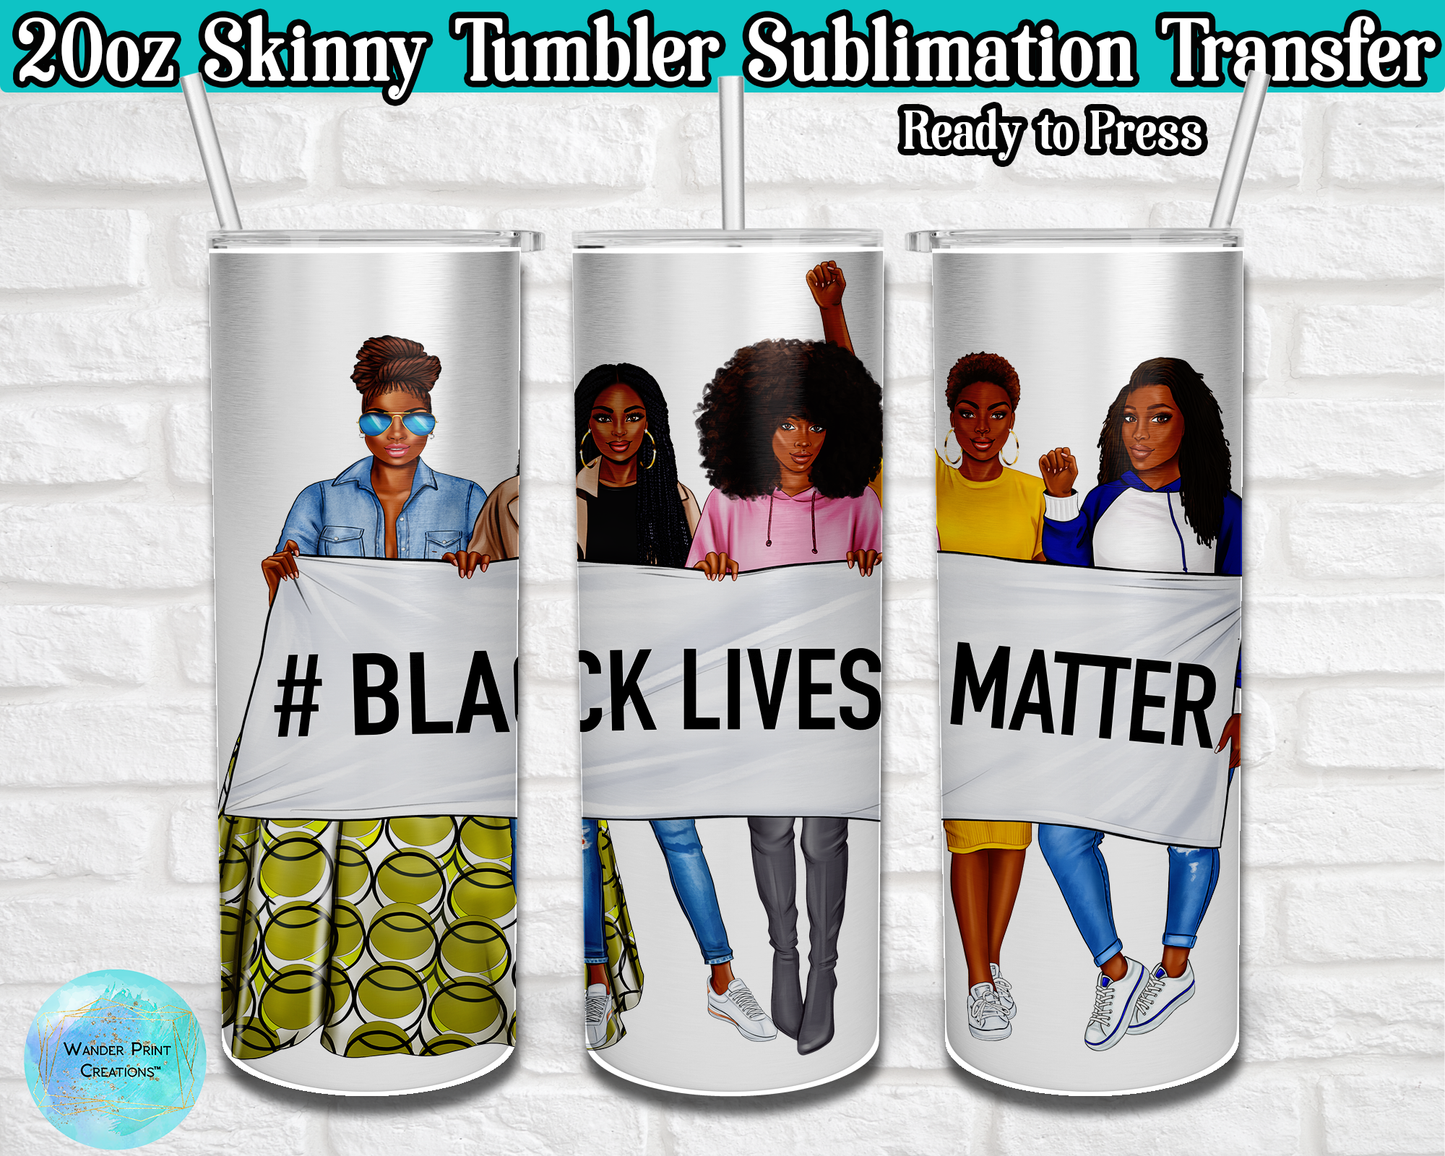 BLACK LIVES MATTER | 20 oz Skinny Tumbler |   SUBLIMATION Transfer | READY TO PRESS